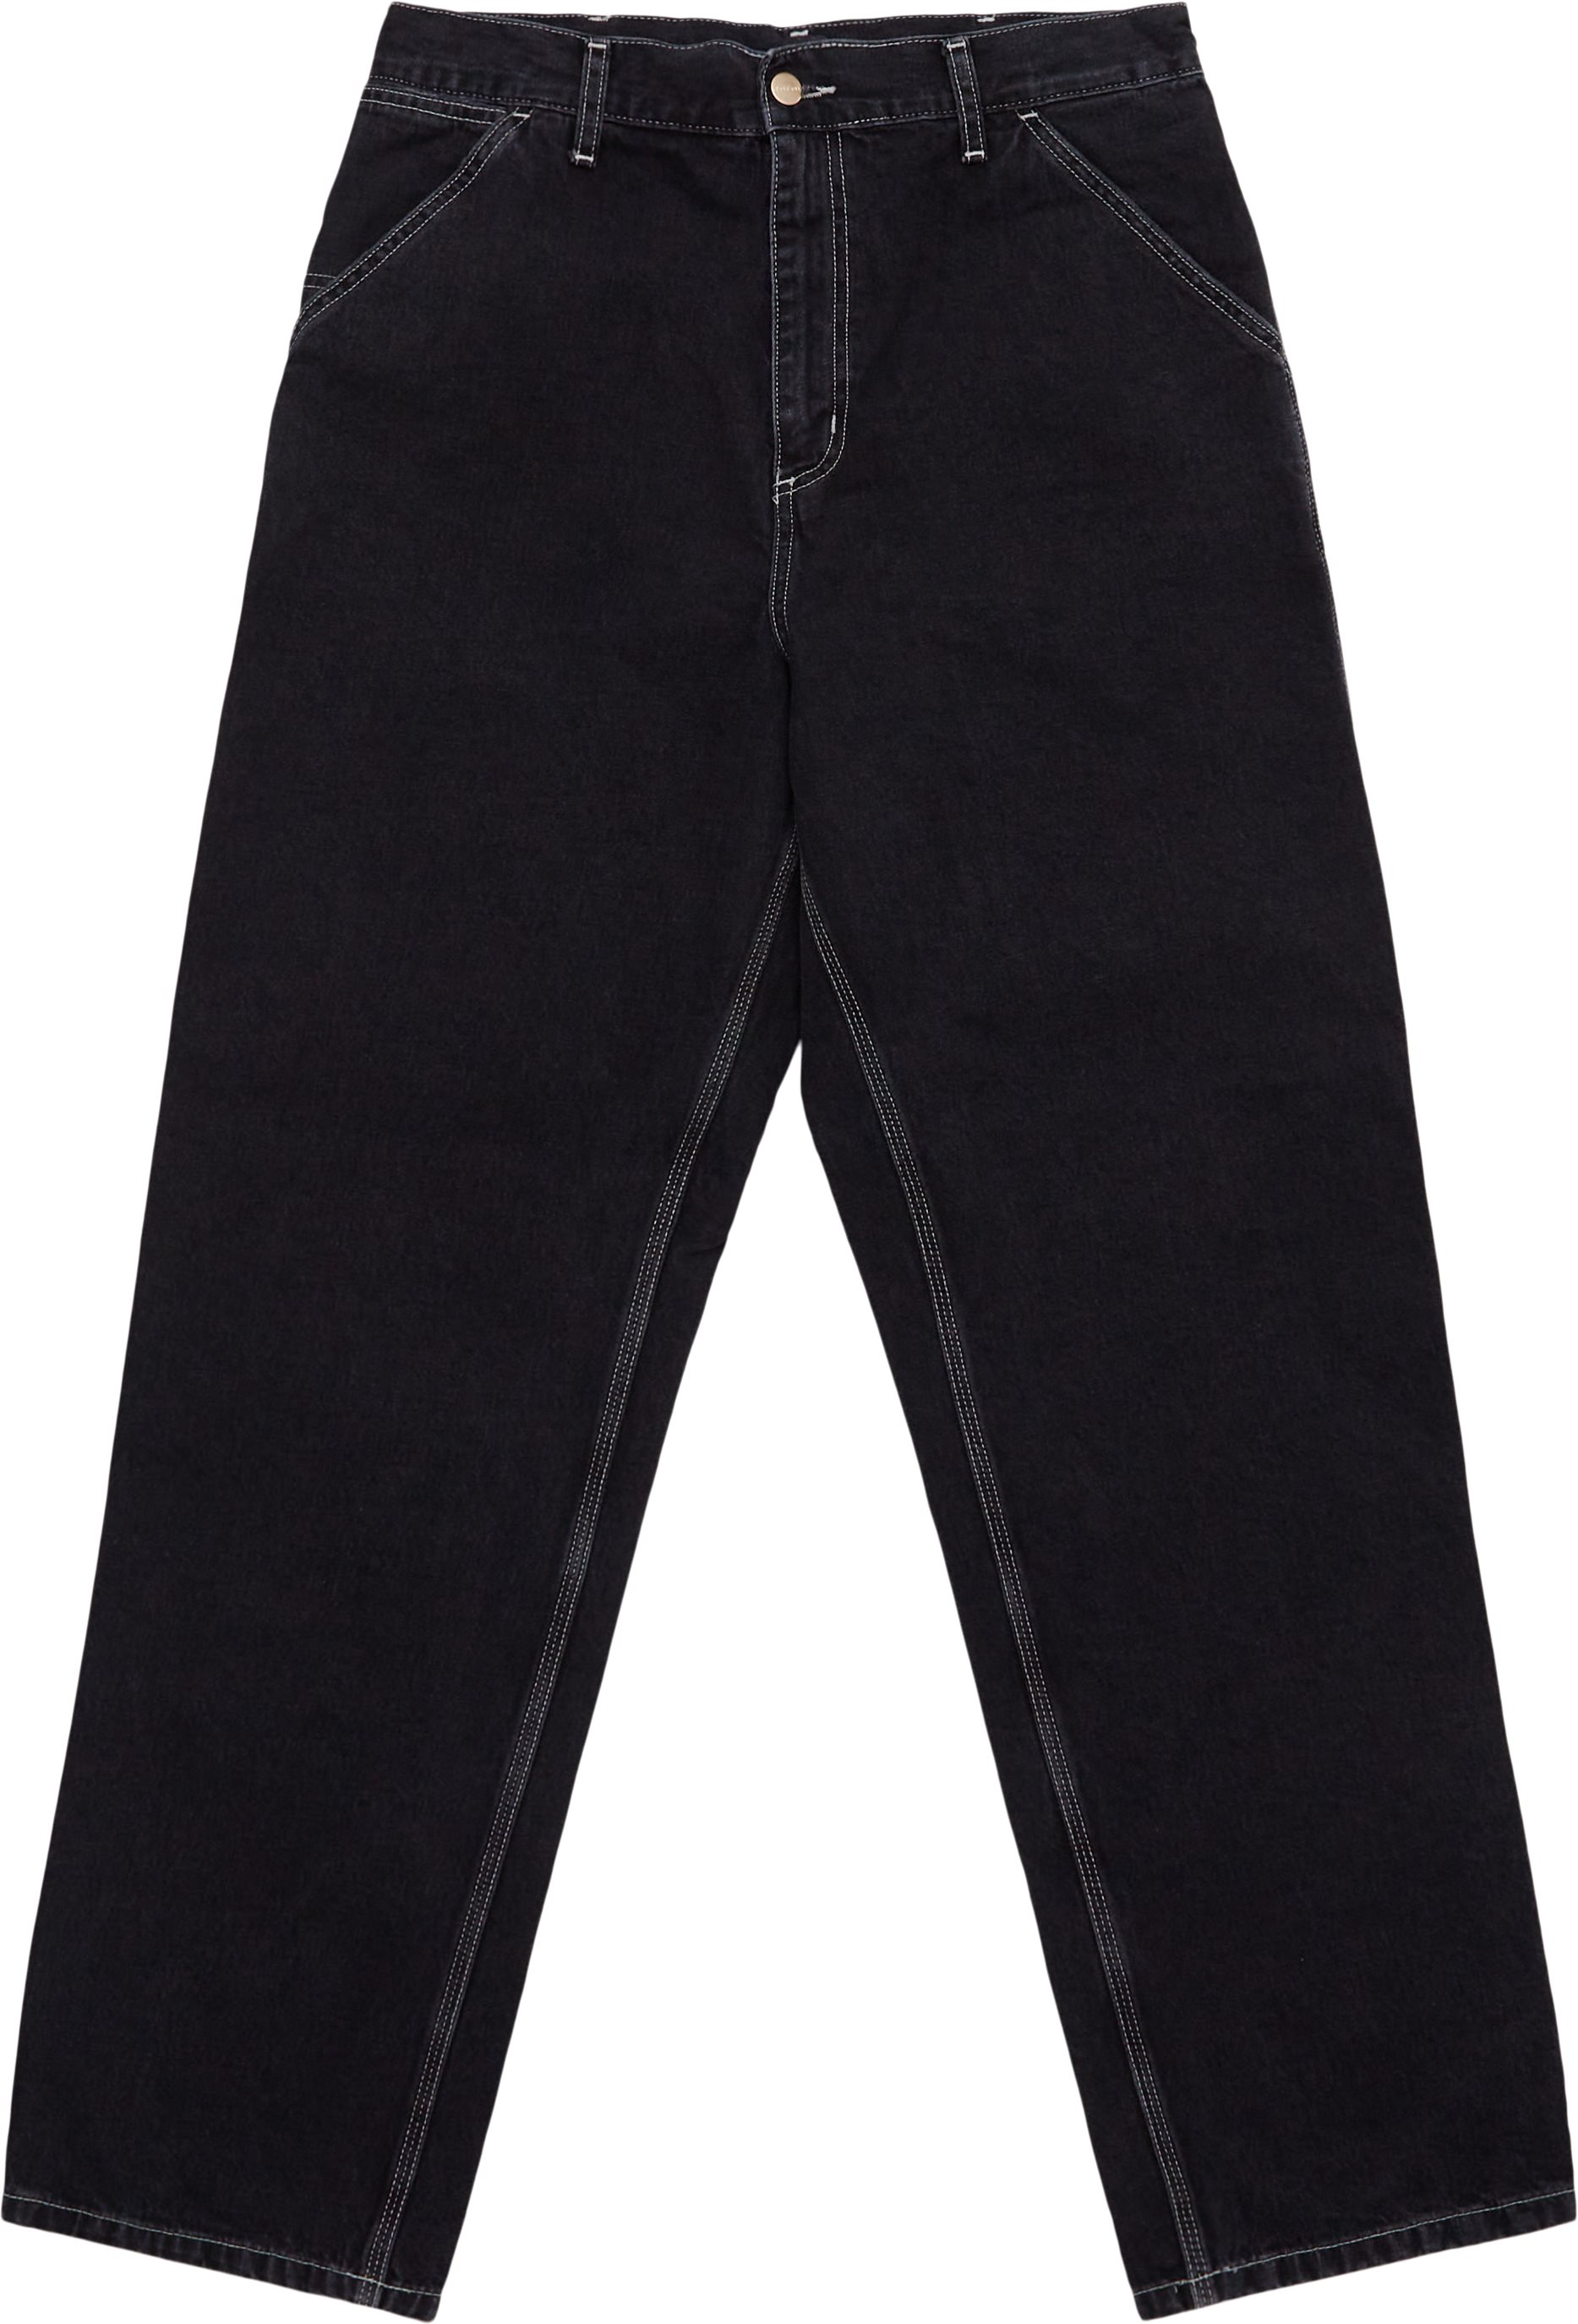 Carhartt WIP Jeans SIMPLE PANT I022947.8906 Sort